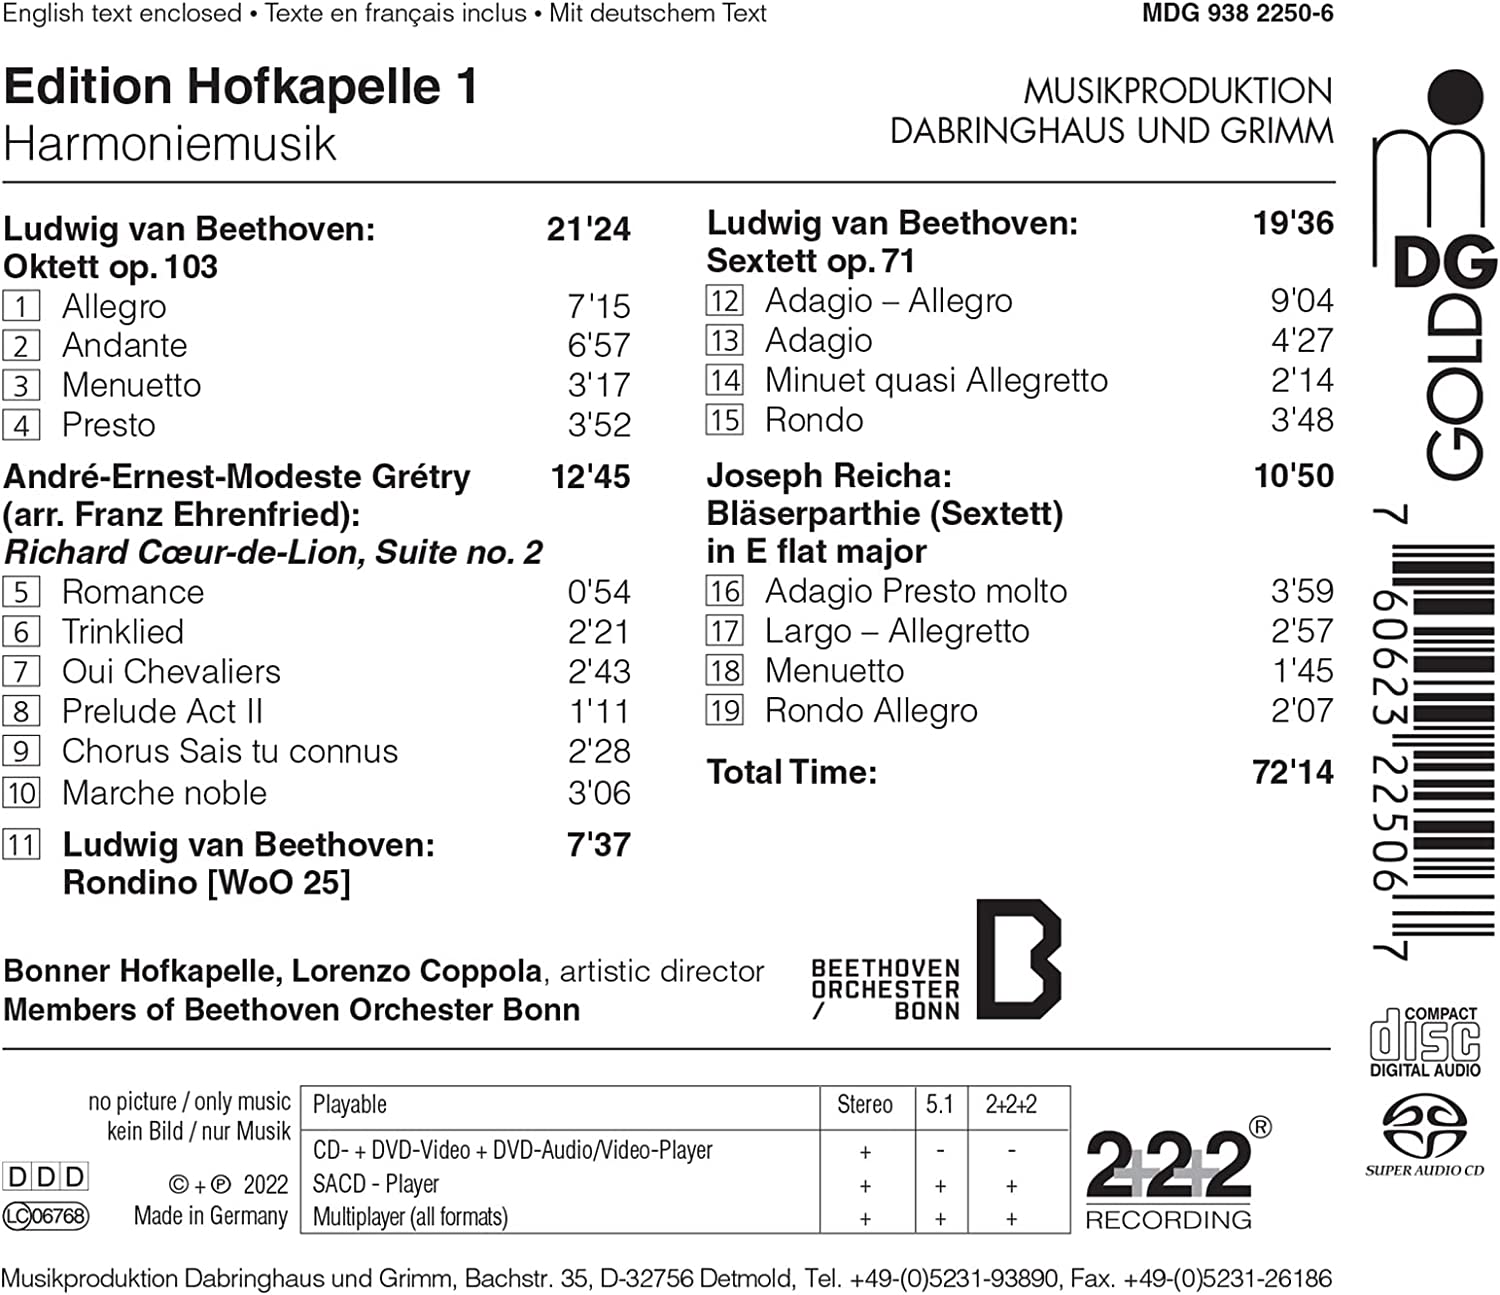 Beethoven Orchester Bonn 베토벤: 목관 실내악 작품집 (Edition Hofkapelle 1: Harmoniemusik)